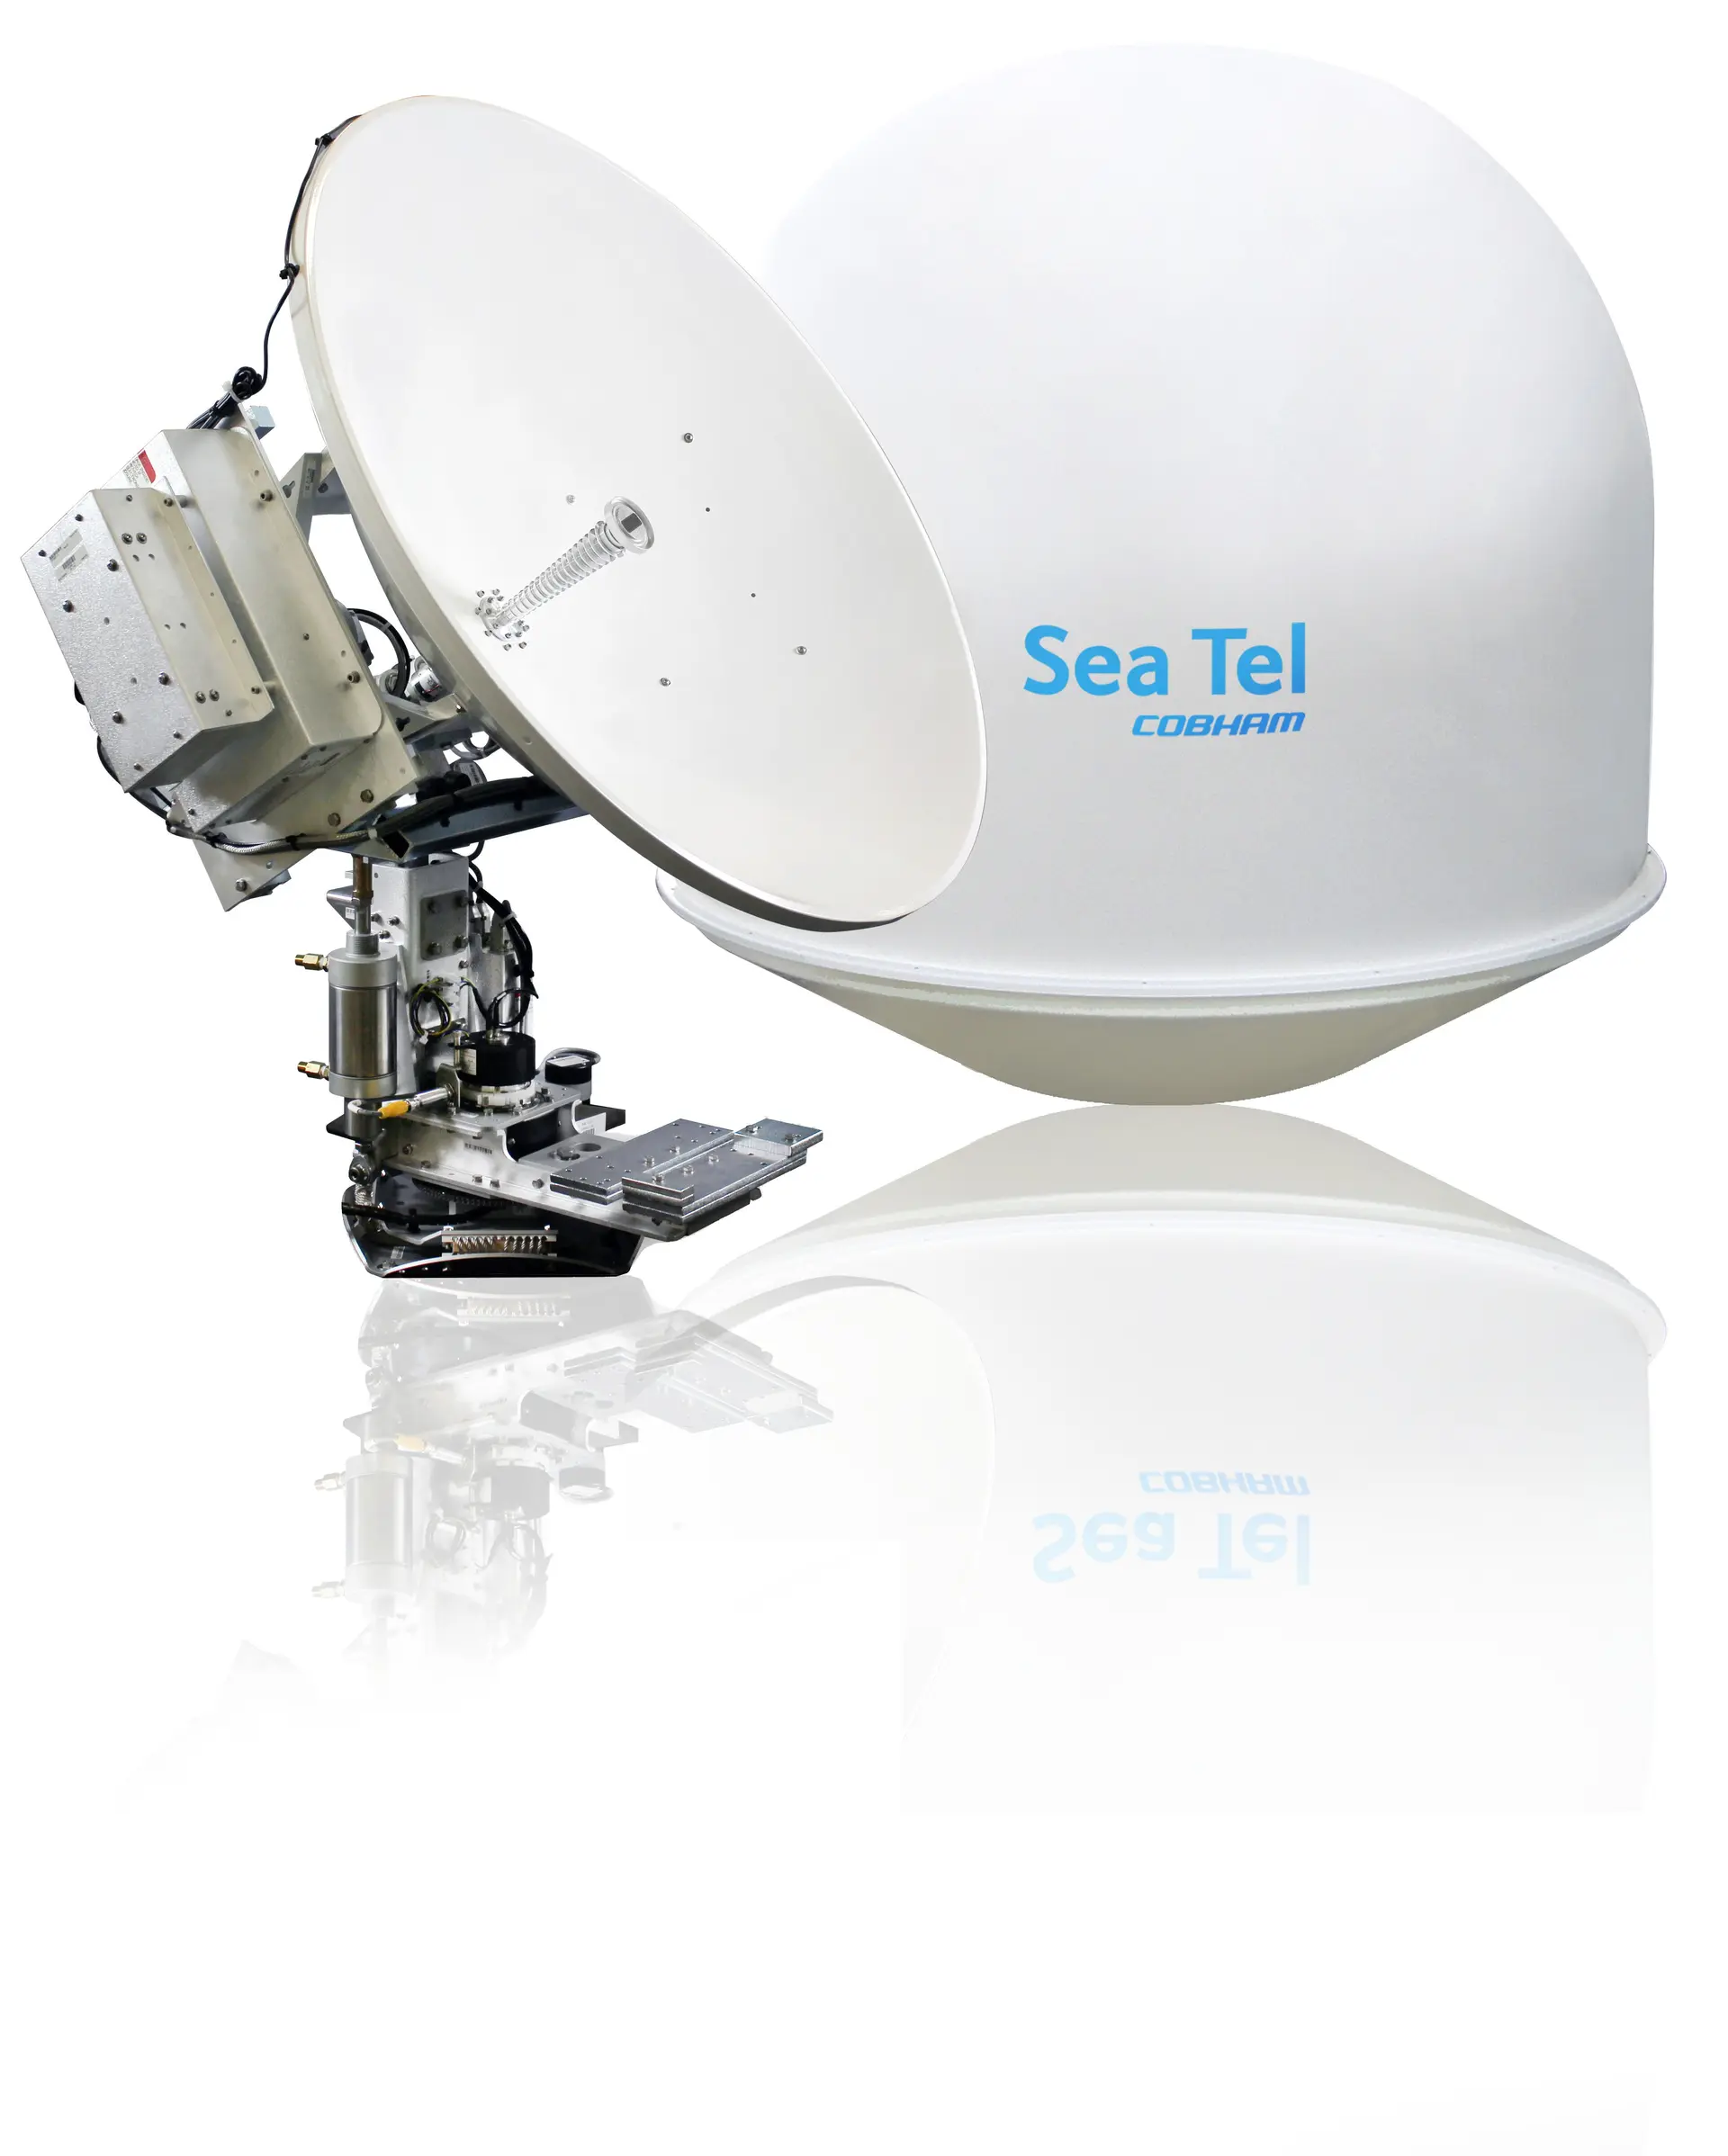 Sea Tel 4009 VSAT.jpg